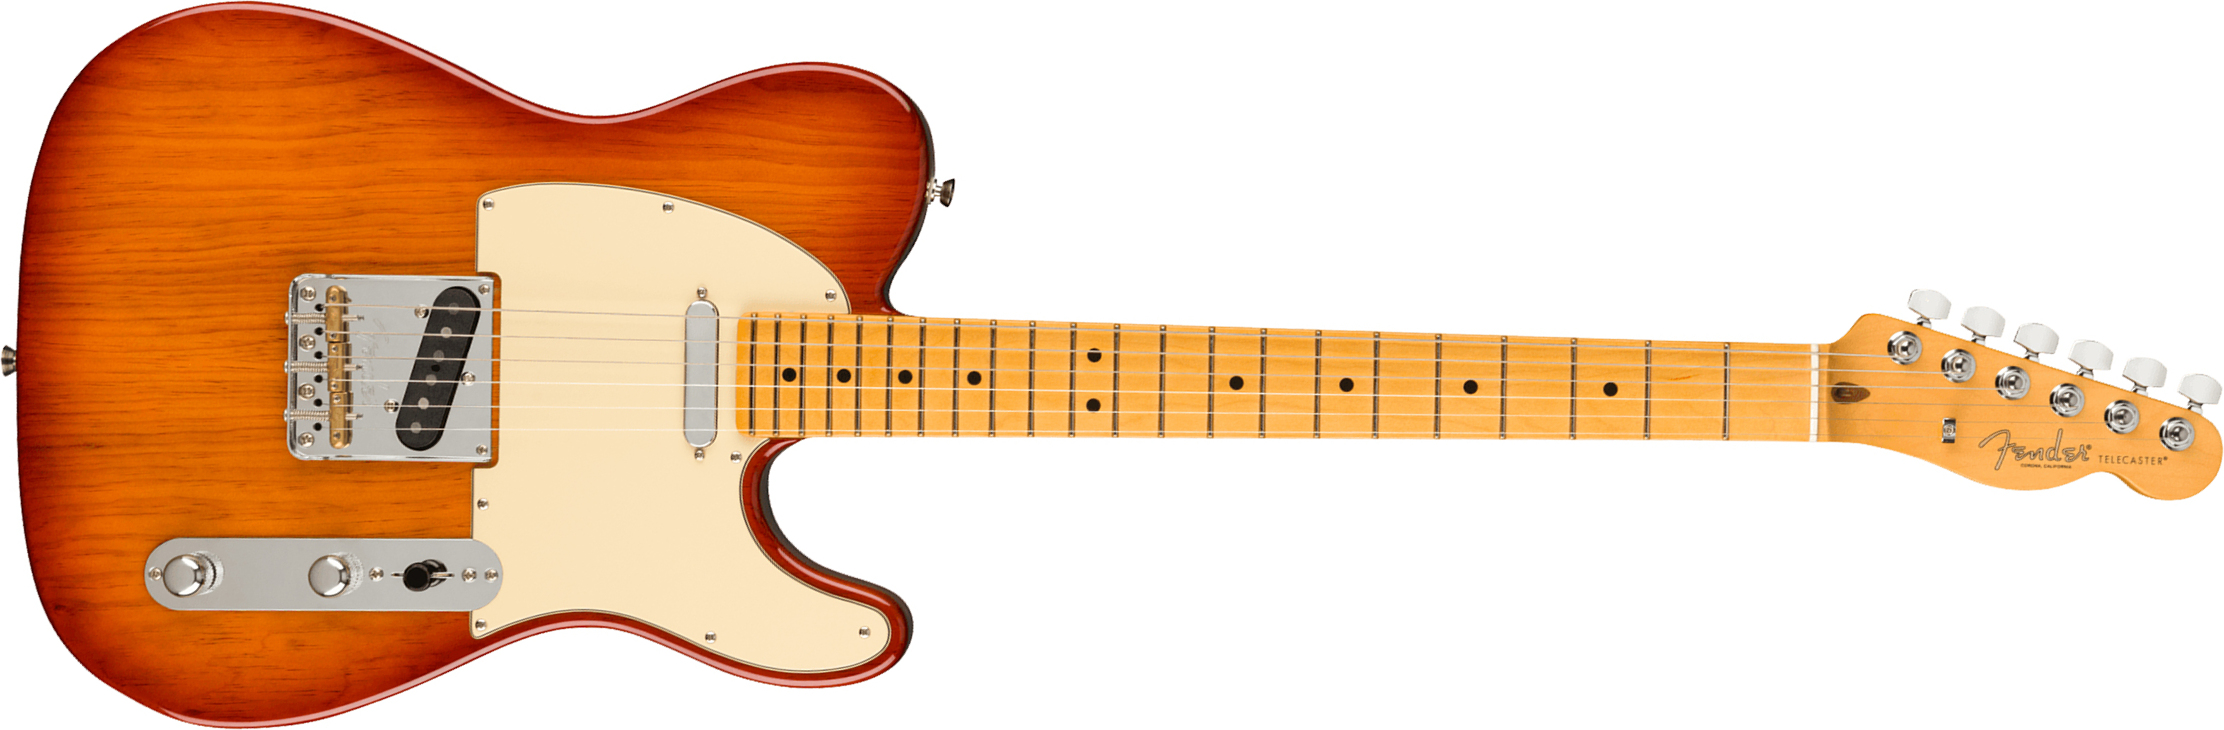 Fender Tele American Professional Ii Usa Mn - Sienna Sunburst - Guitare Électrique Forme Tel - Main picture